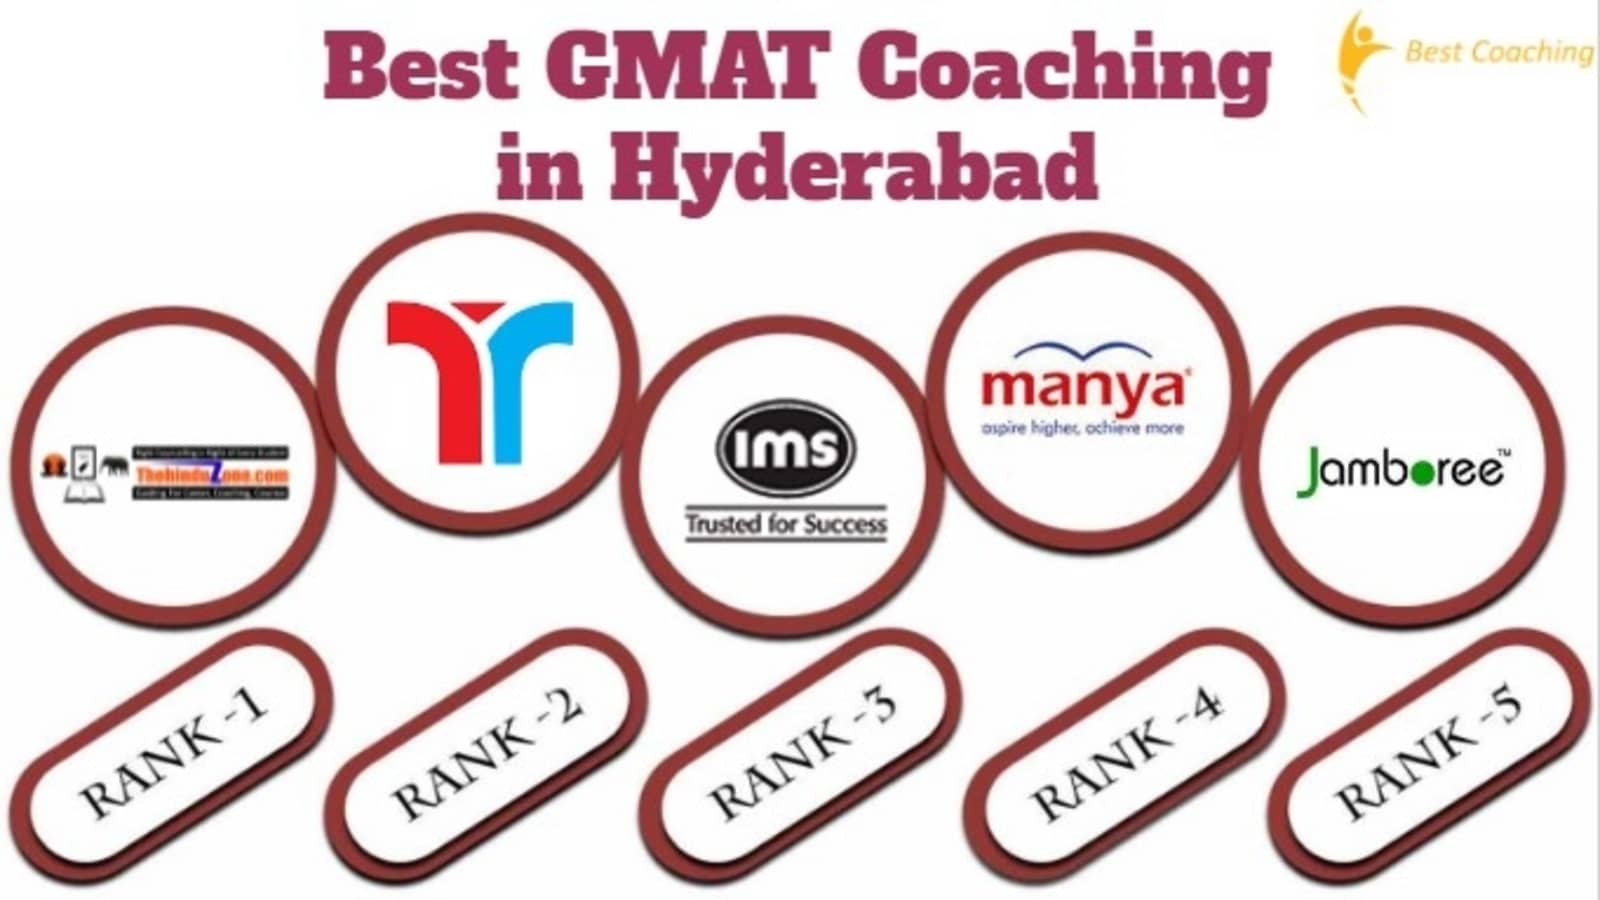 Top GMAT Coaching in Hyderabad